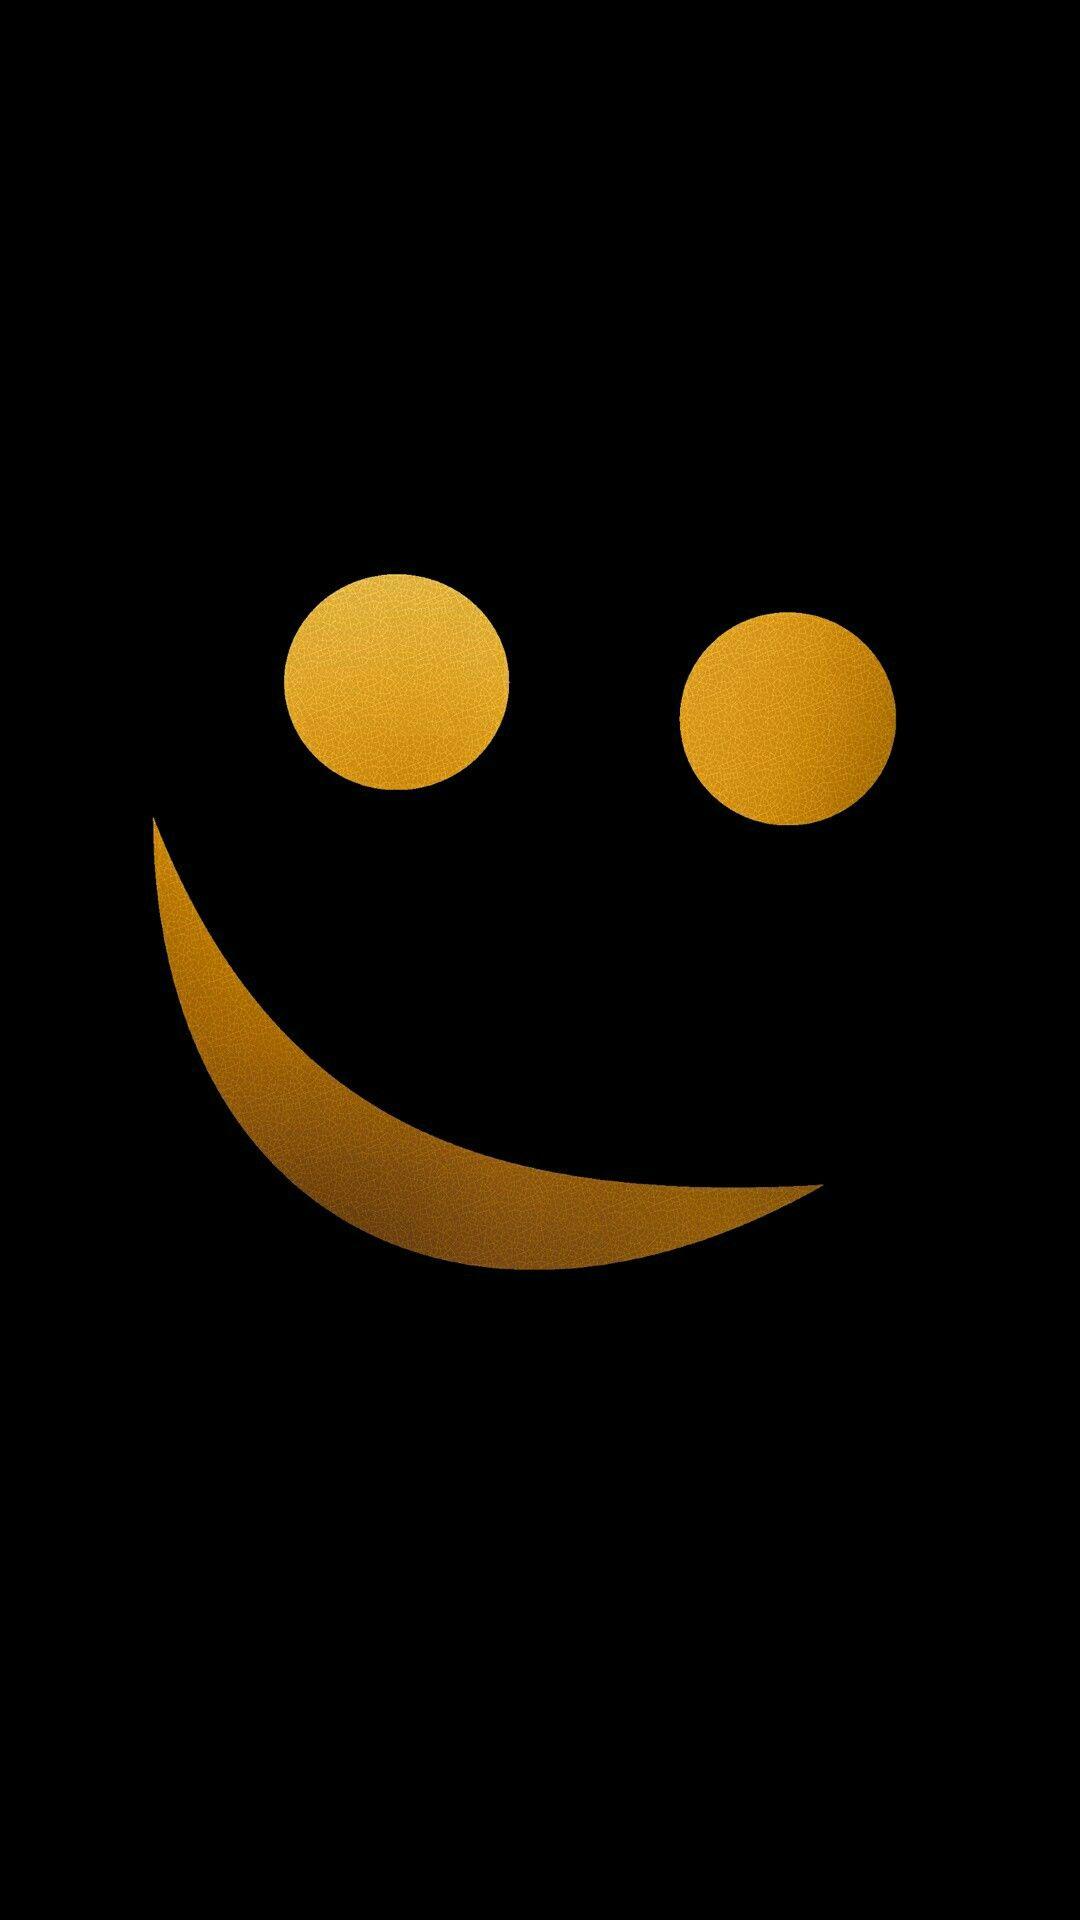 Dark Emoji Wallpapers - Top Free Dark Emoji Backgrounds - WallpaperAccess